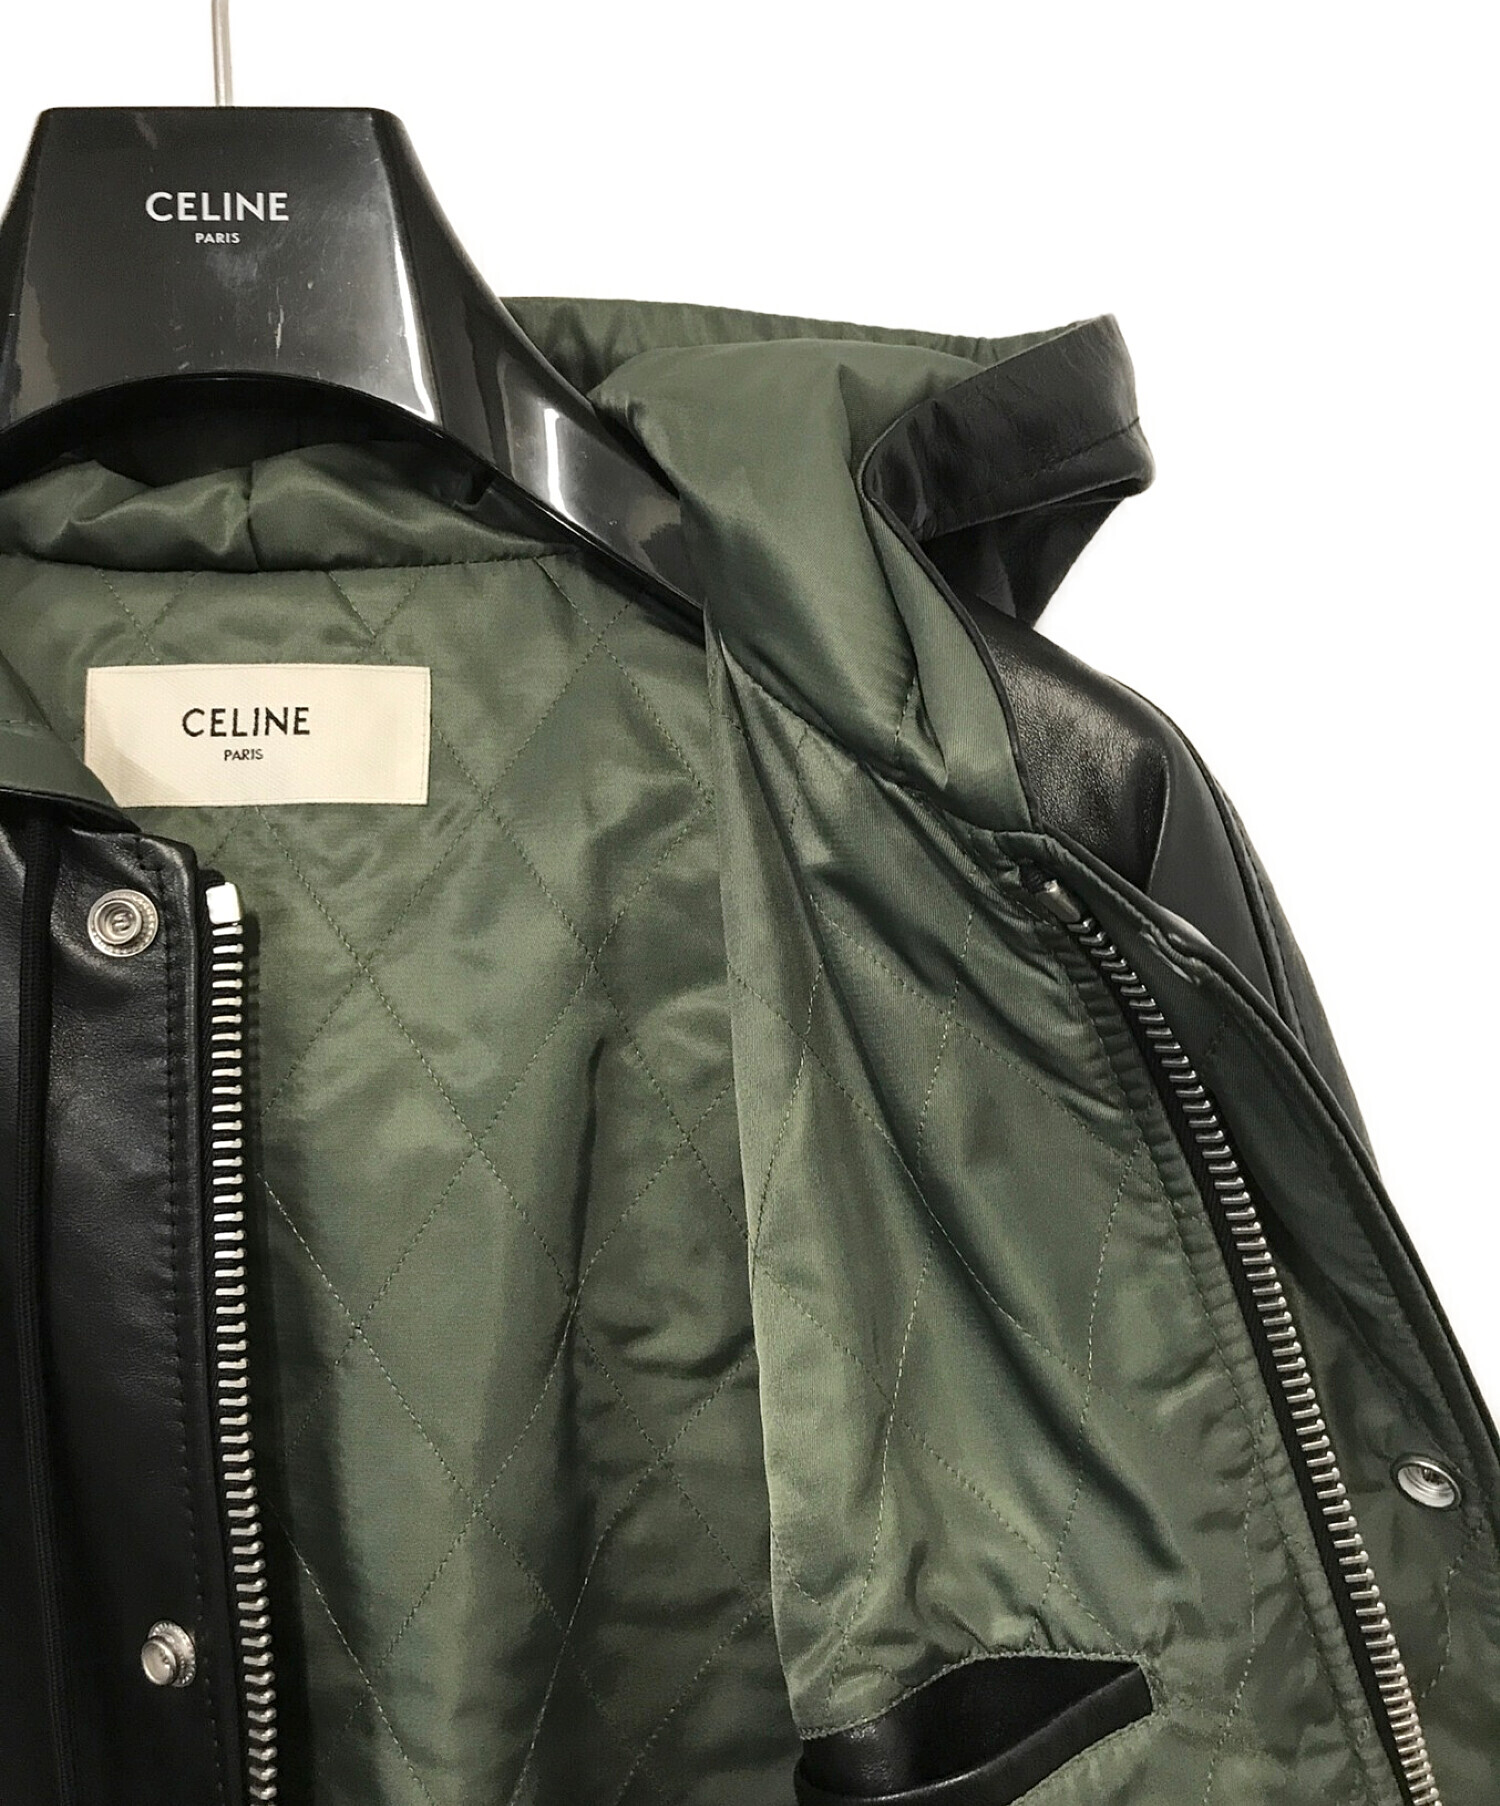 CELINE (セリーヌ) Oversized Blouson Jacket / オーバーサイズ ブルゾンジャケット ブラック サイズ:46